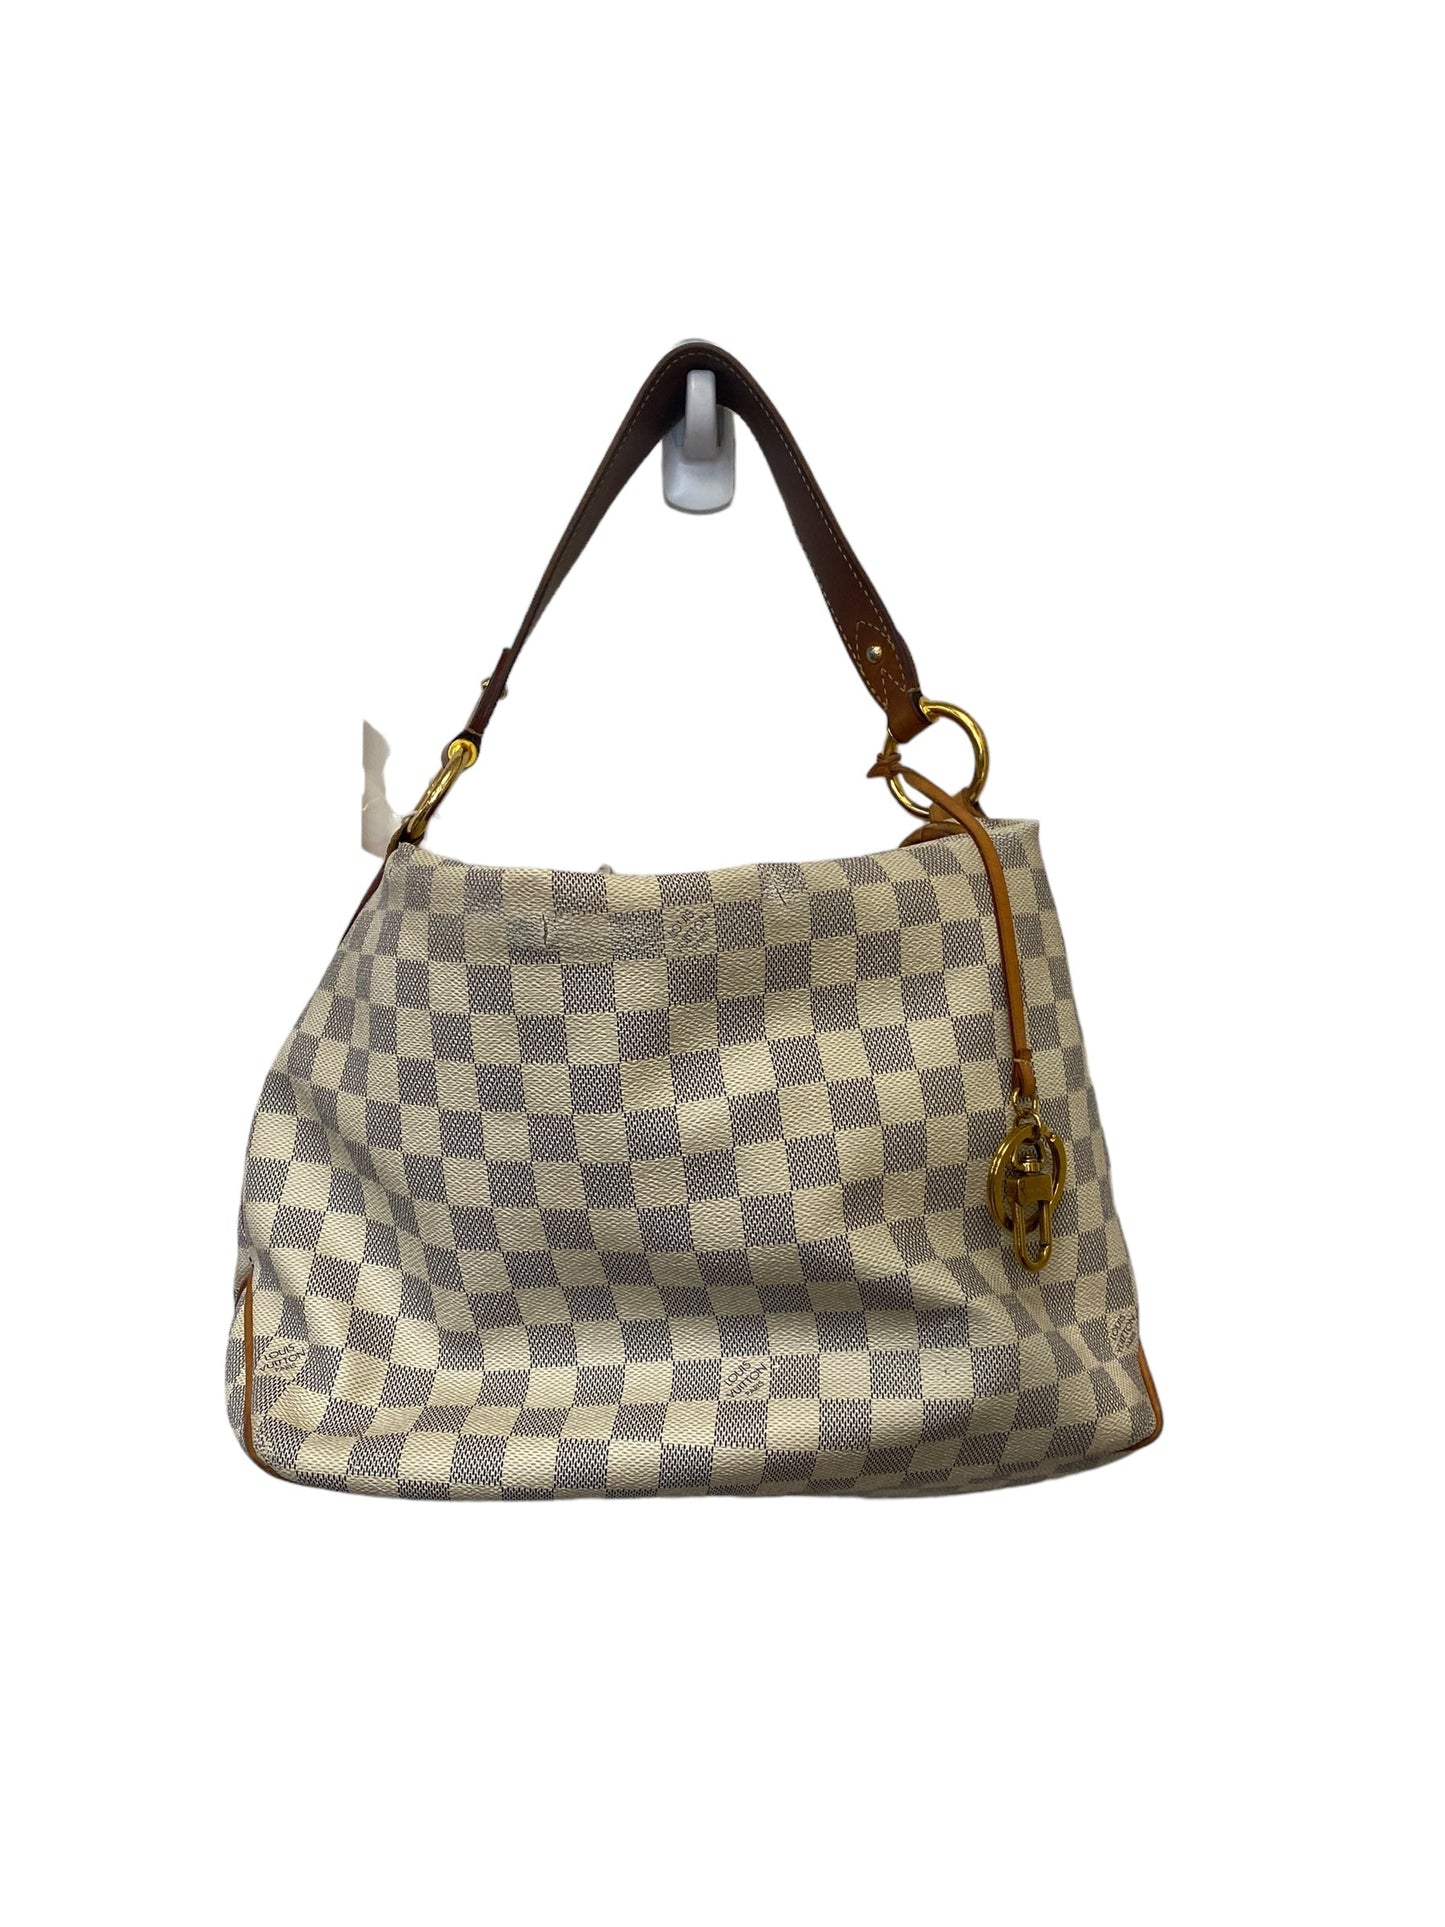 Handbag Luxury Designer Louis Vuitton, Size Medium